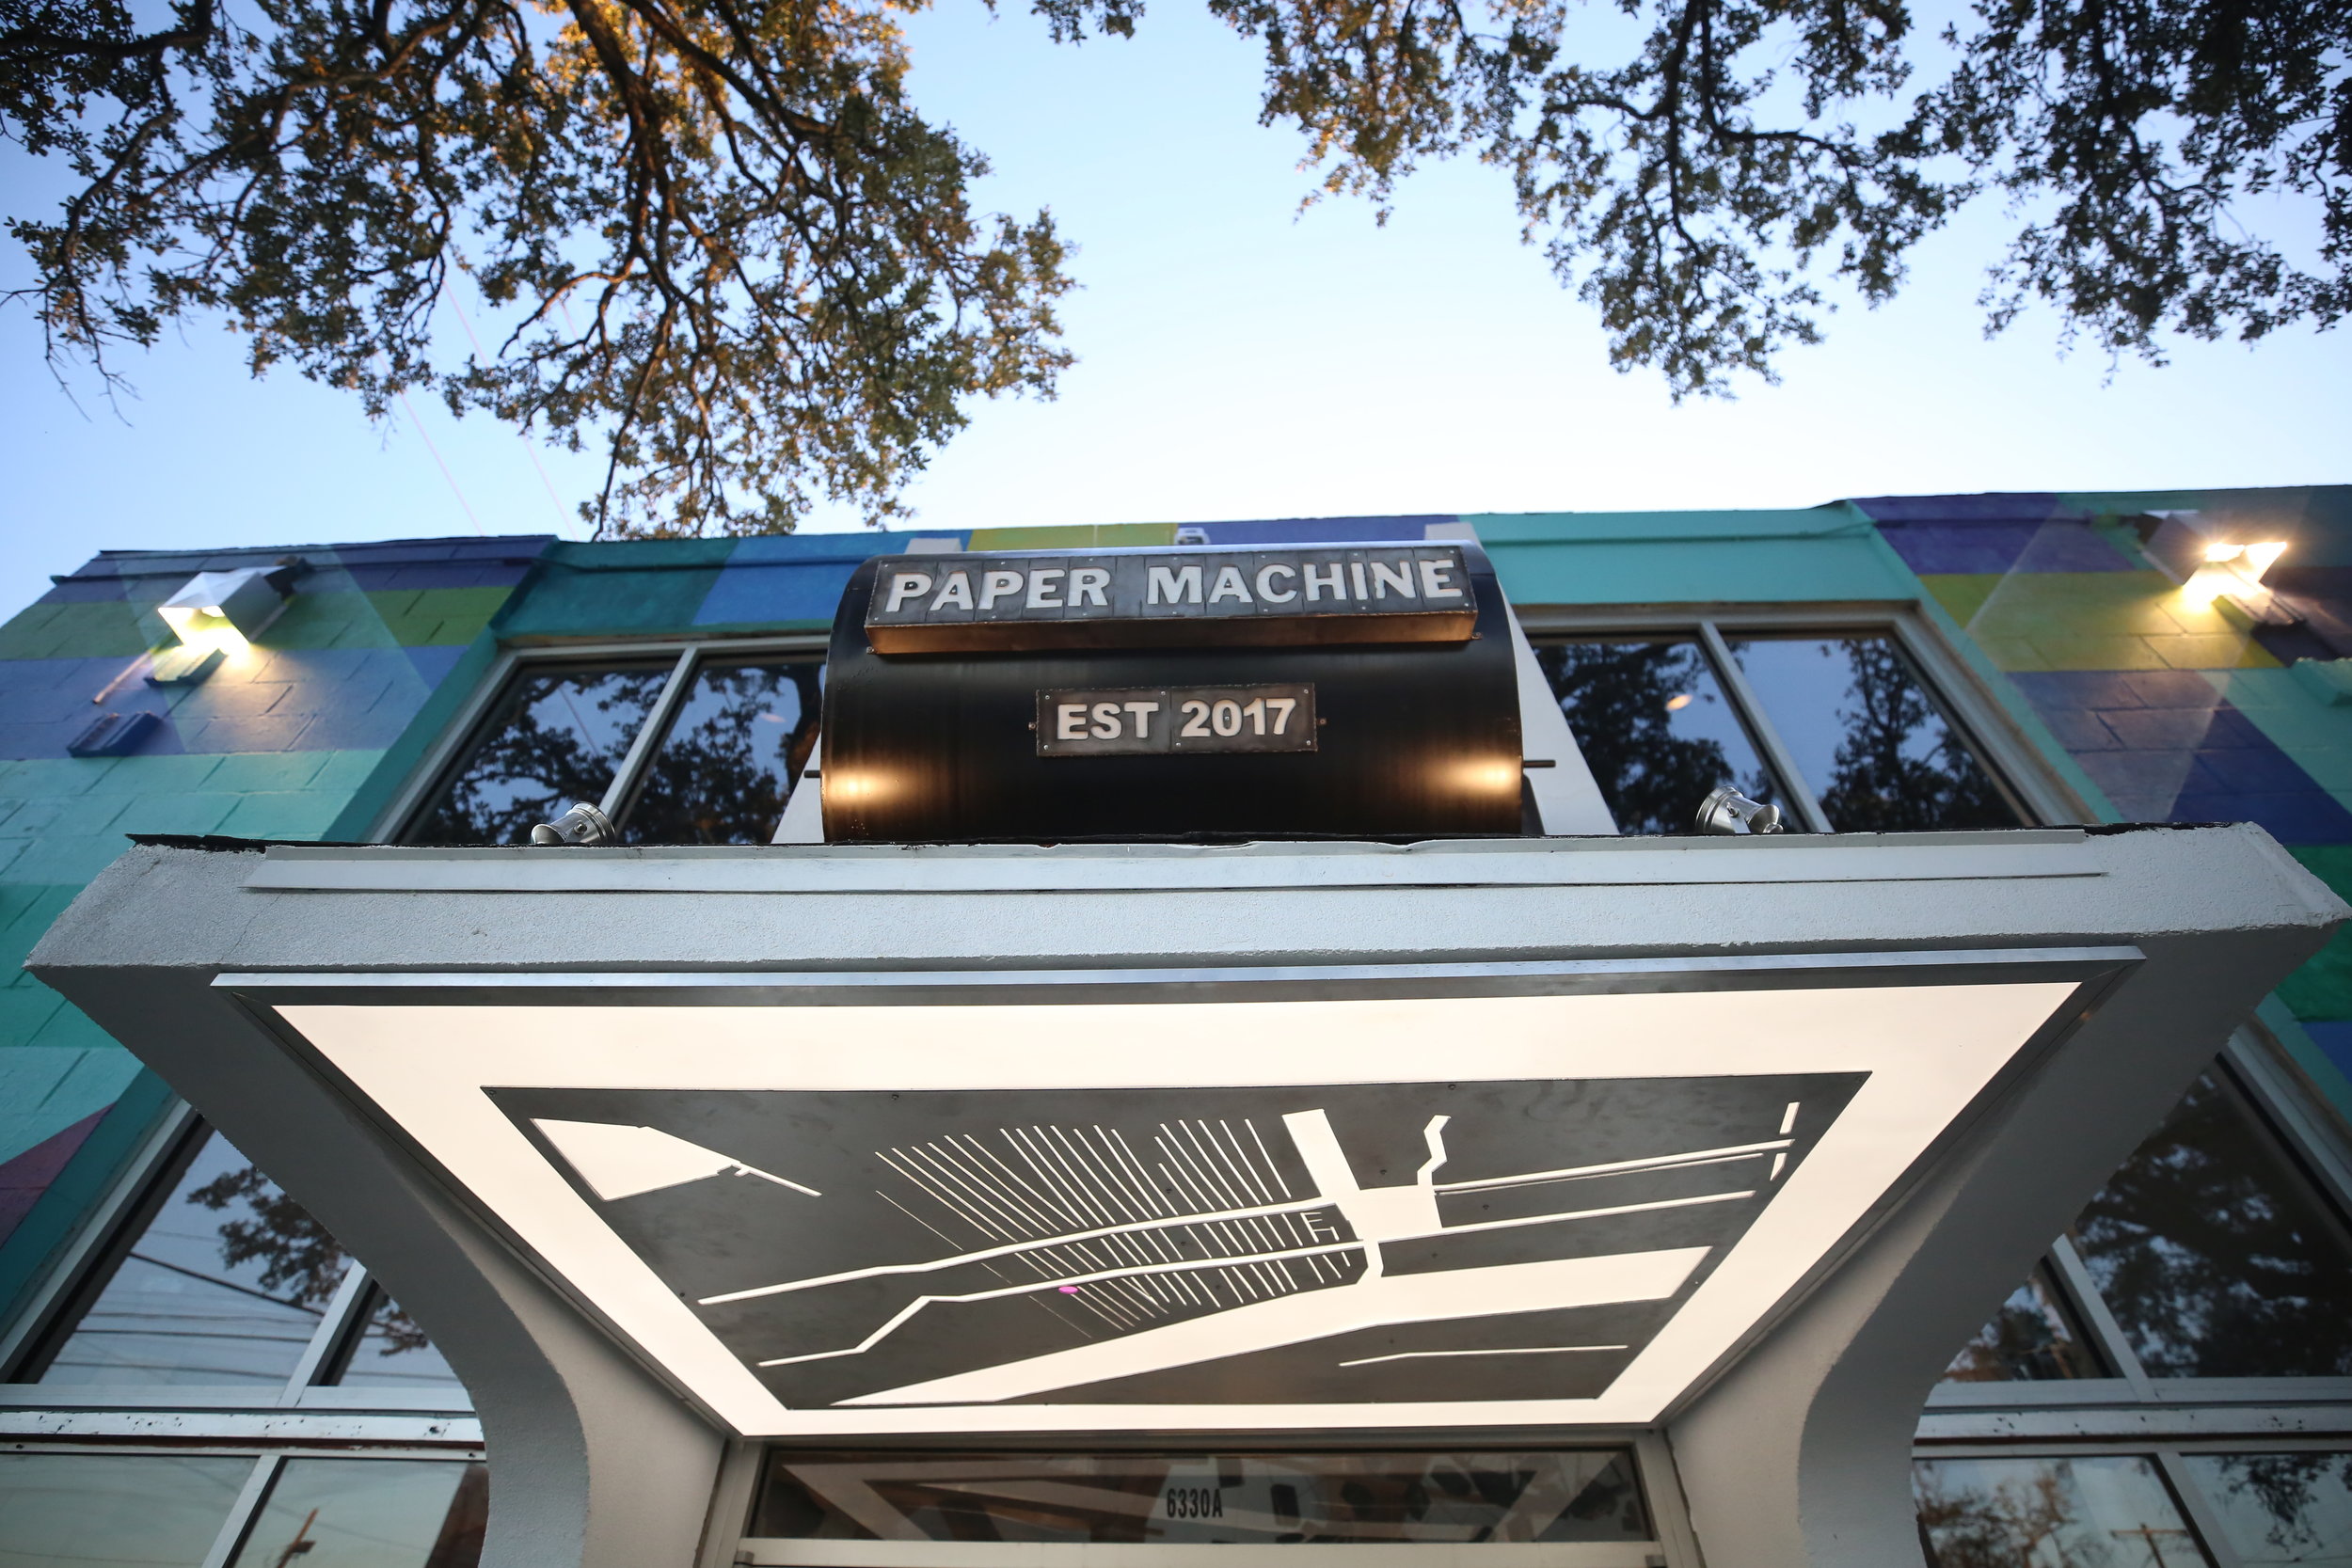 11-28-2017 Opening of Paper Machine 030 (1).jpeg